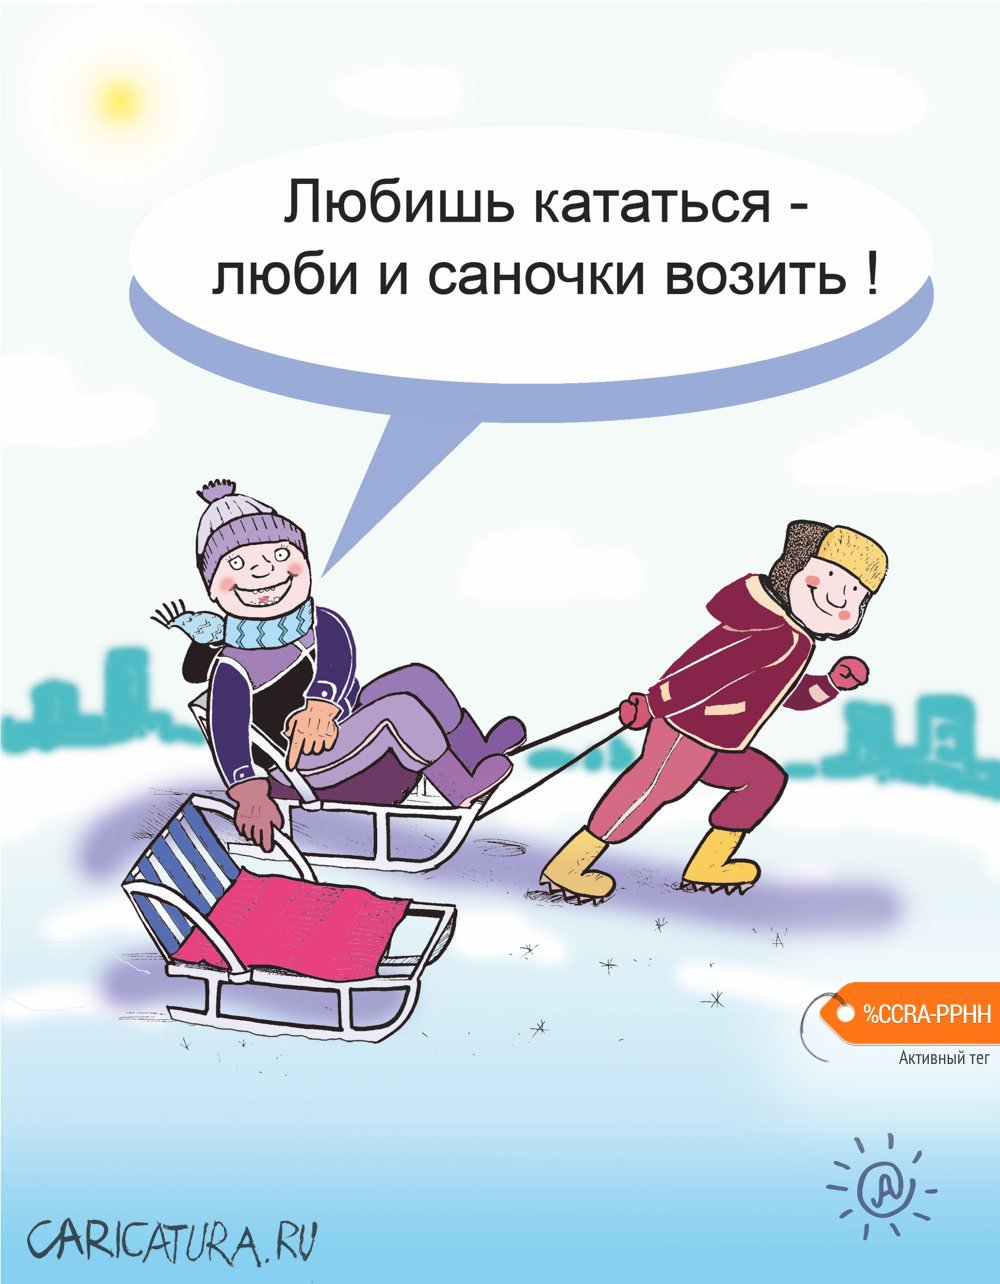 Карикатура "Саночки", Павел Атаманчук